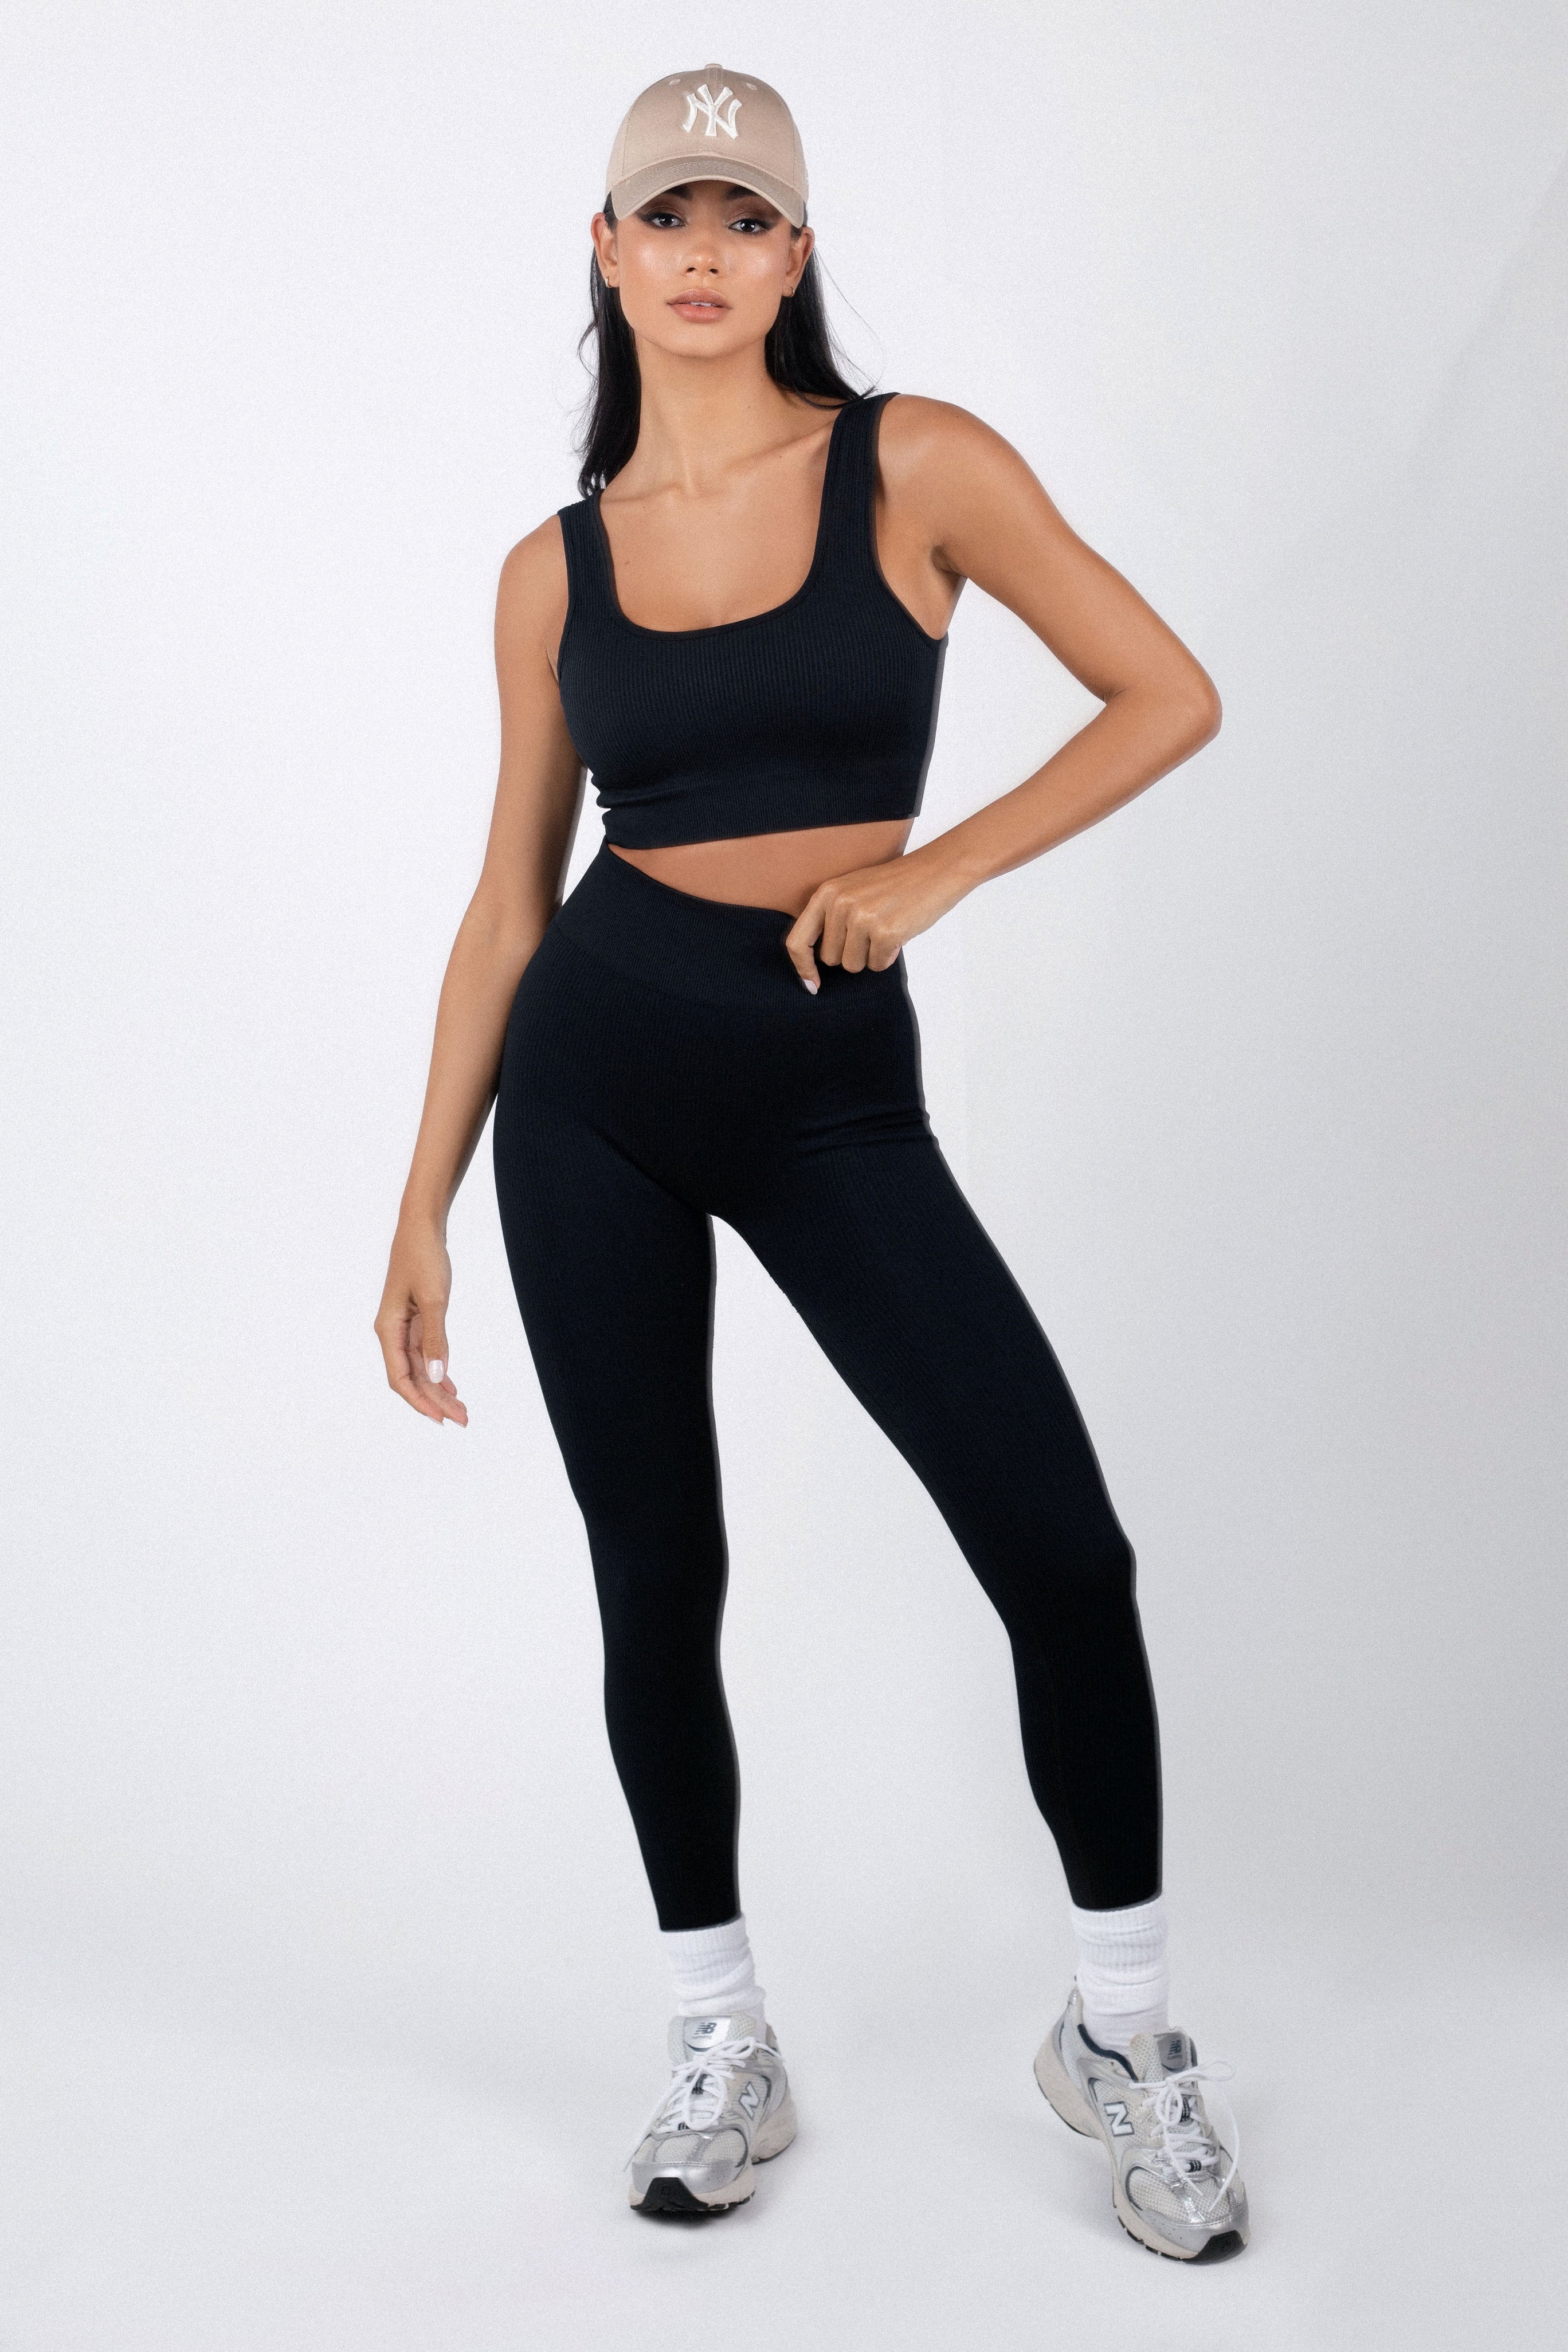 Peer Women's High Waist Seamless Workout Leggings Yoga Pants No See Through  Tummy Control Running Pants (Tie Dye White - Dark Grey, Medium) price in  UAE,  UAE